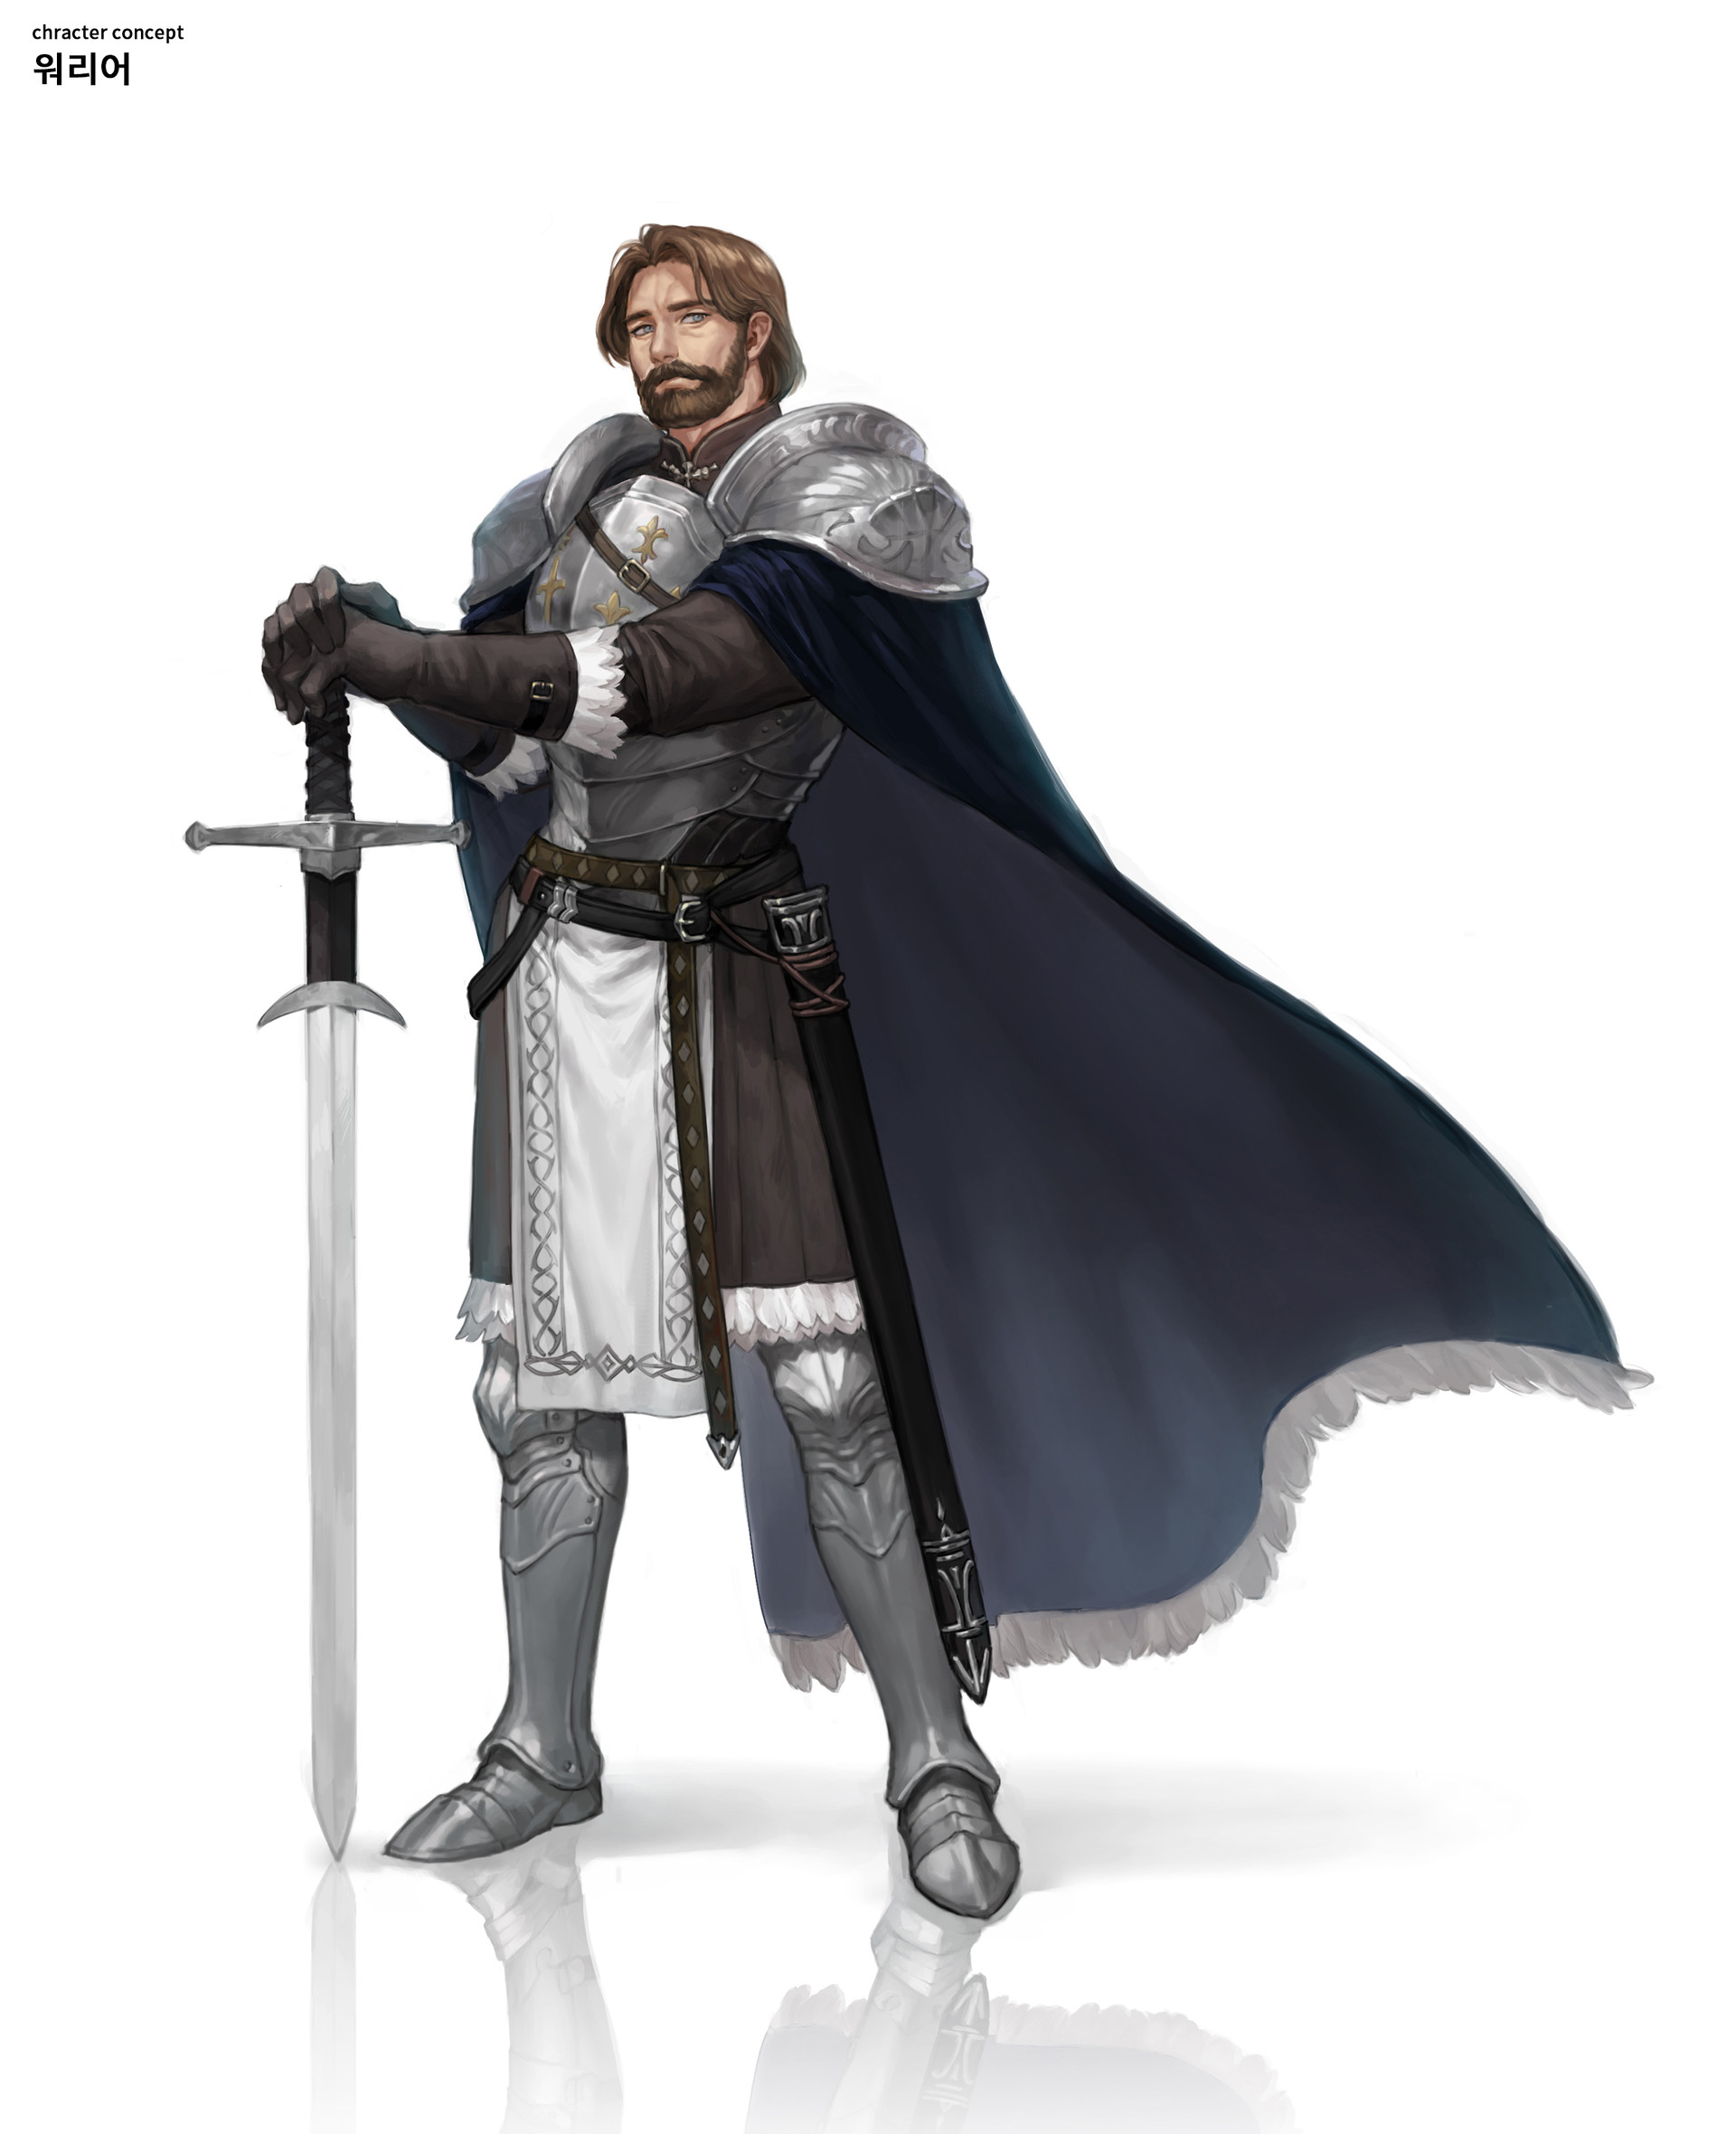 General 1920x2360 drawing men warrior knight brunette beard short hair armor steel cape weapon belt sword reflection white